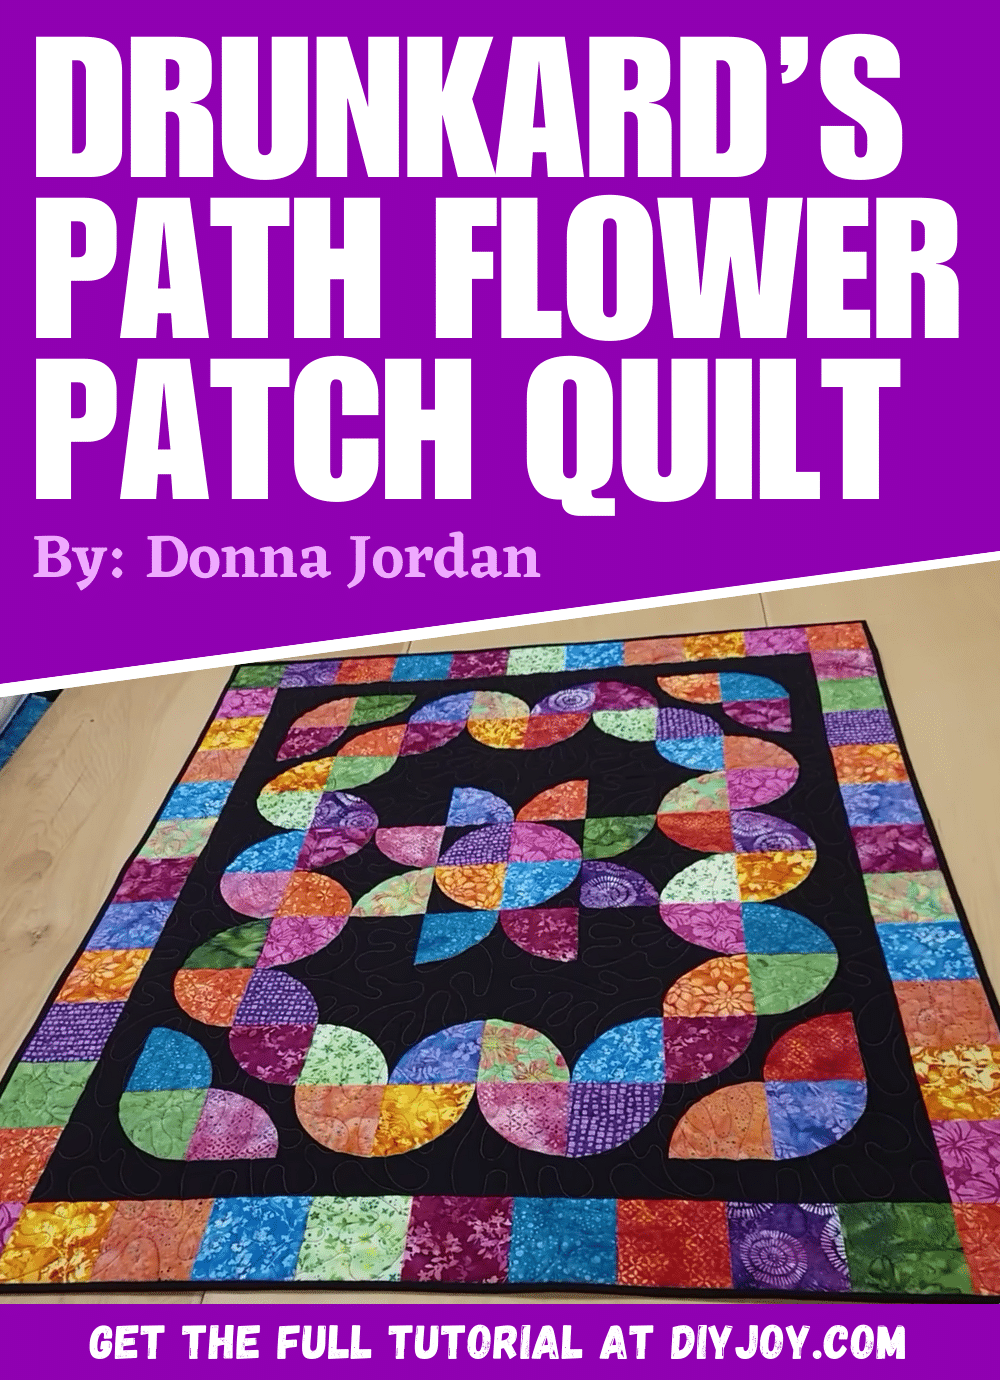 Donna Jordan’s Drunkard’s Path Flower Patch Quilt Tutorial